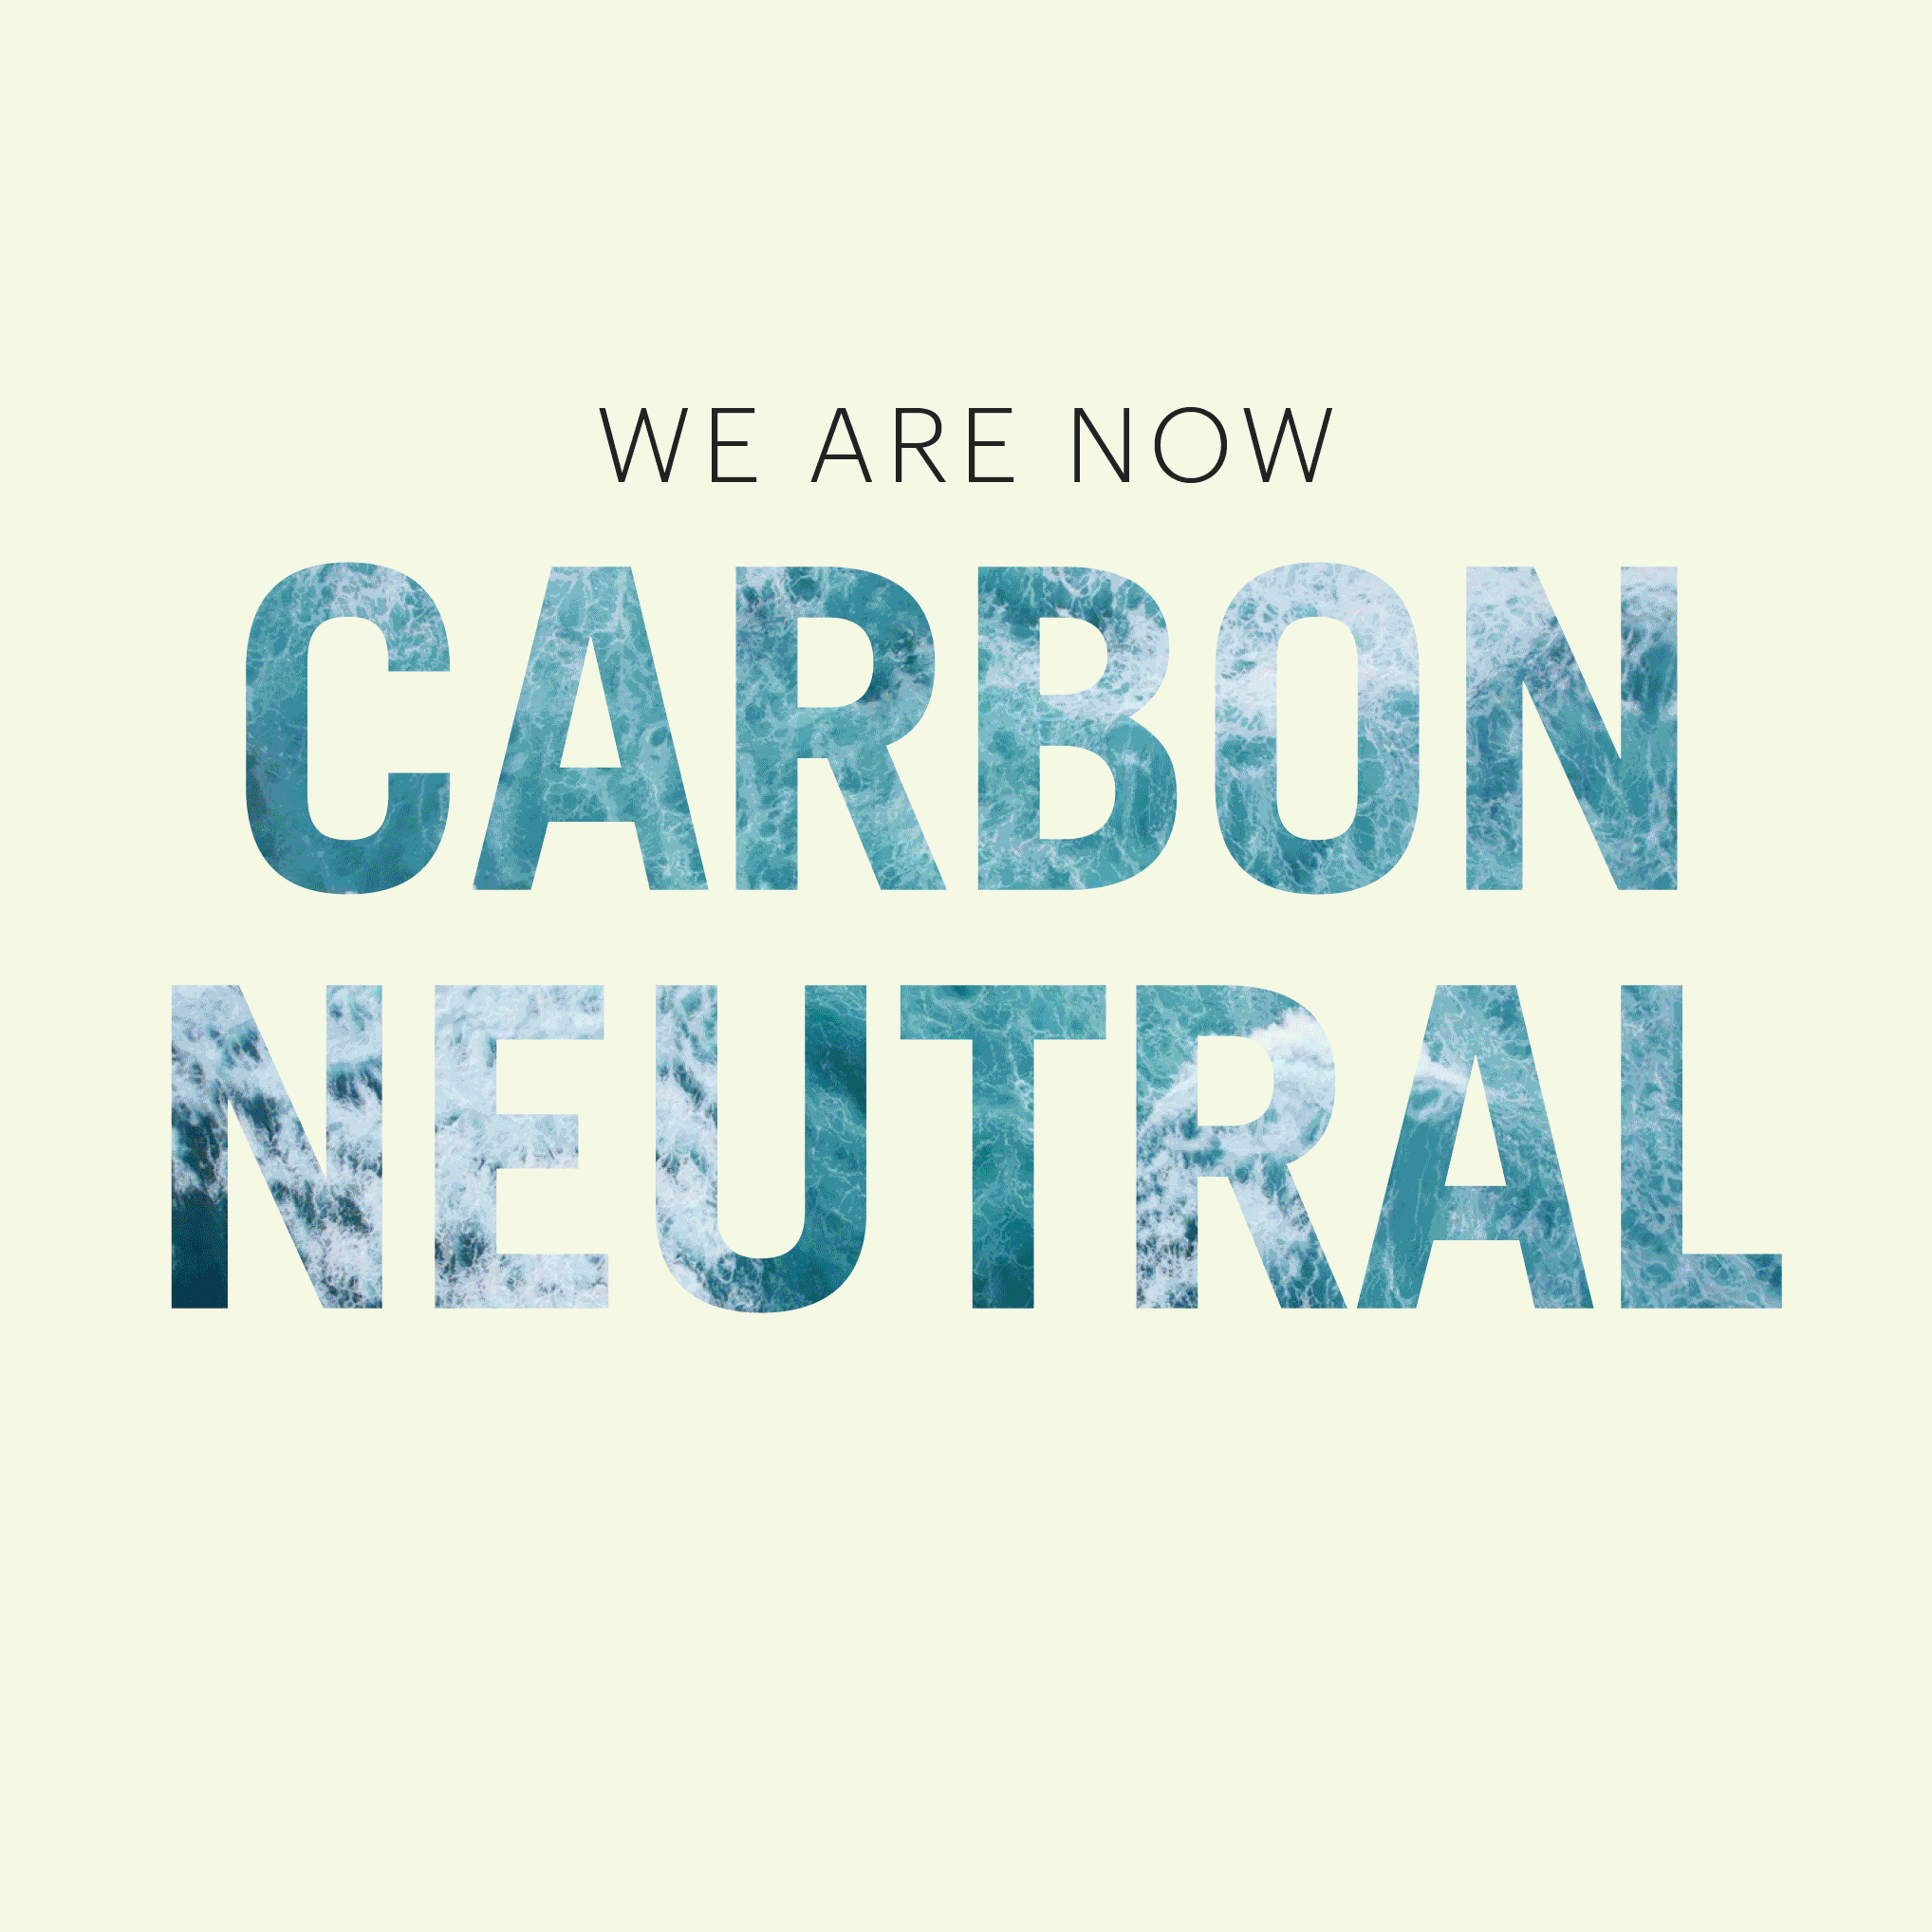 HKS is Now a Carbon Neutral Business